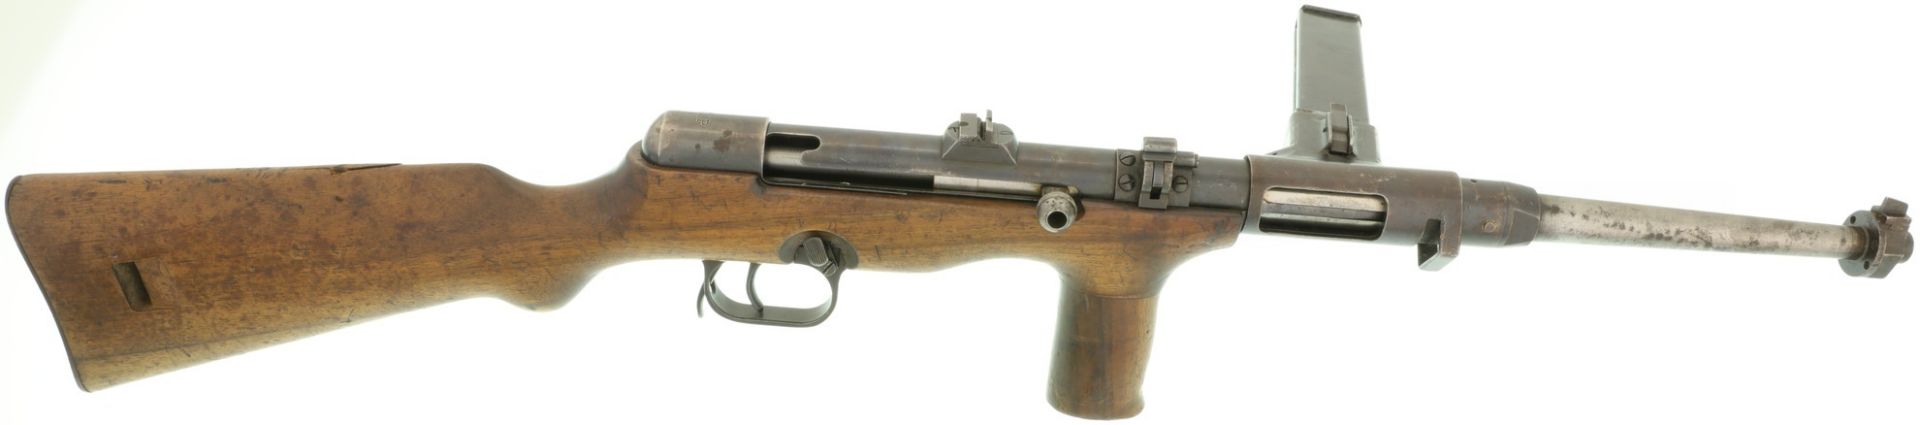 Maschinenpistole Erma EMP, Mod. 34, Kal. 9mmLargo